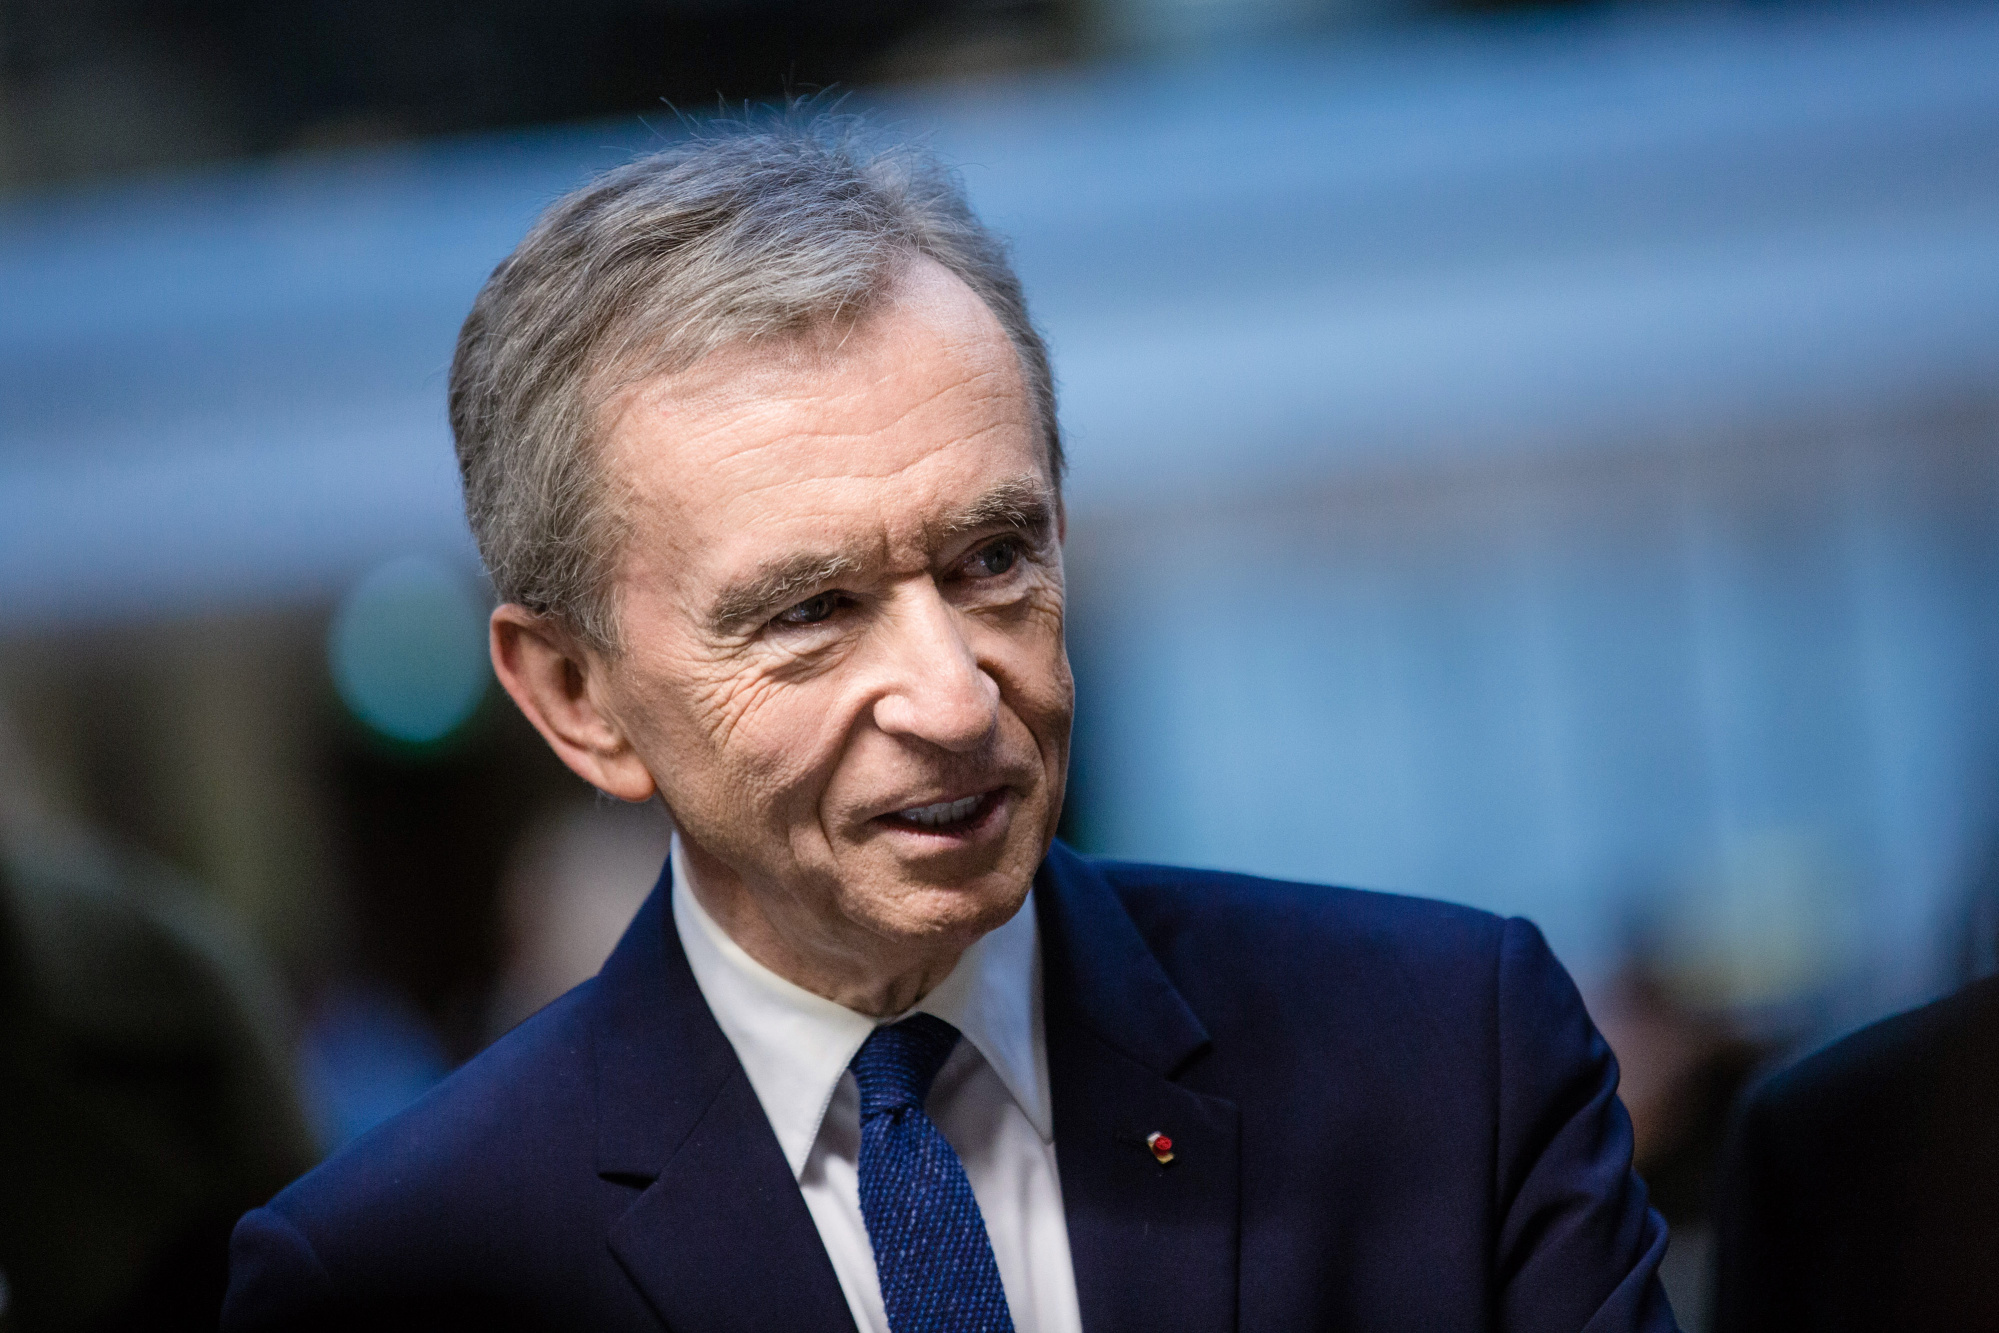 LVMH billionaire Bernard Arnault will donate €200 million to repair Notre  Dame